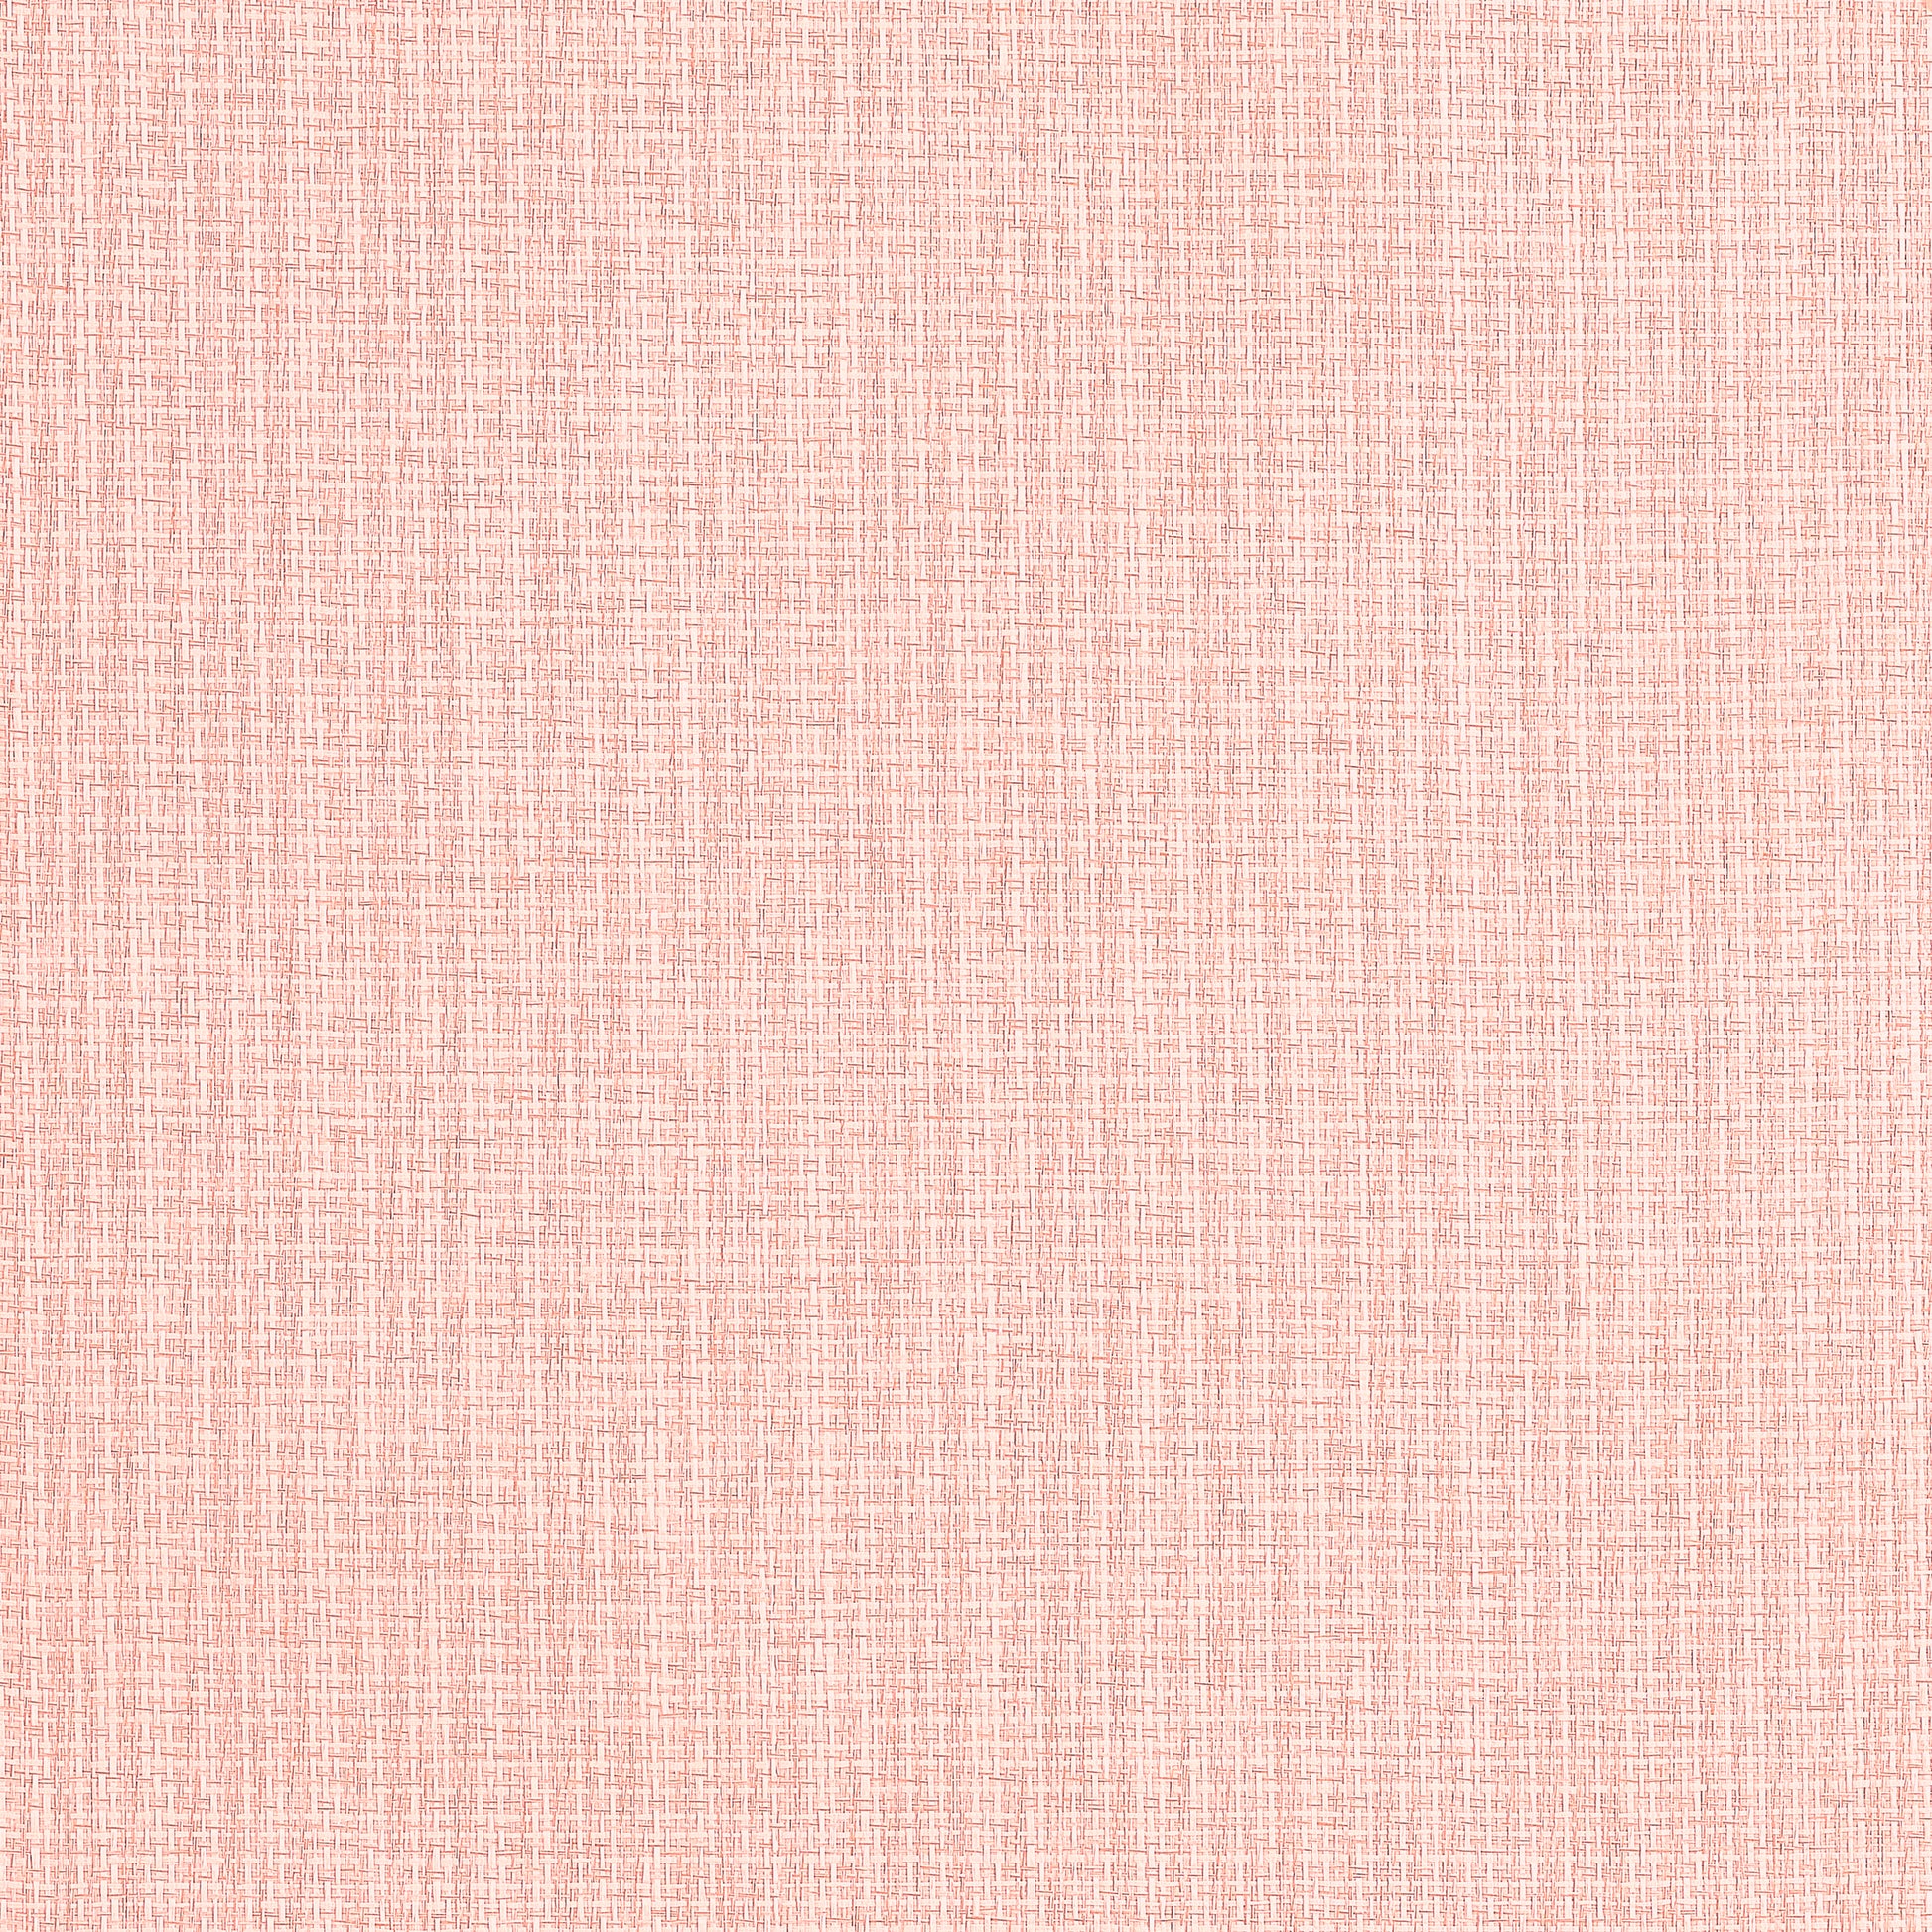 Purchase Thibaut Wallpaper SKU T19631 pattern name Coastline color Blush. 